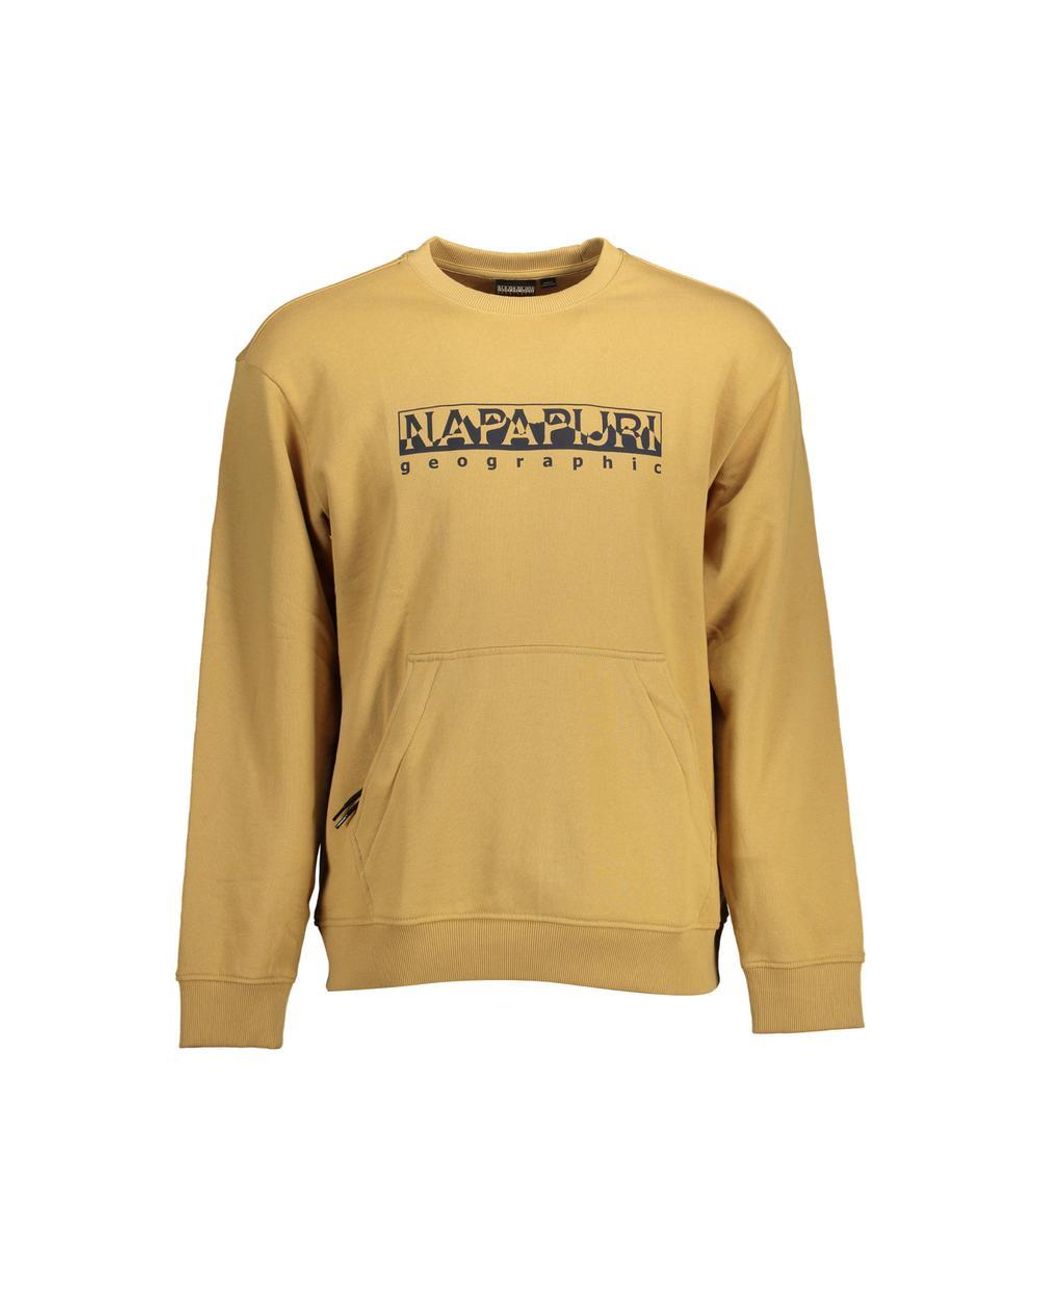 Napapijri Sweater Yellow for Men | Lyst